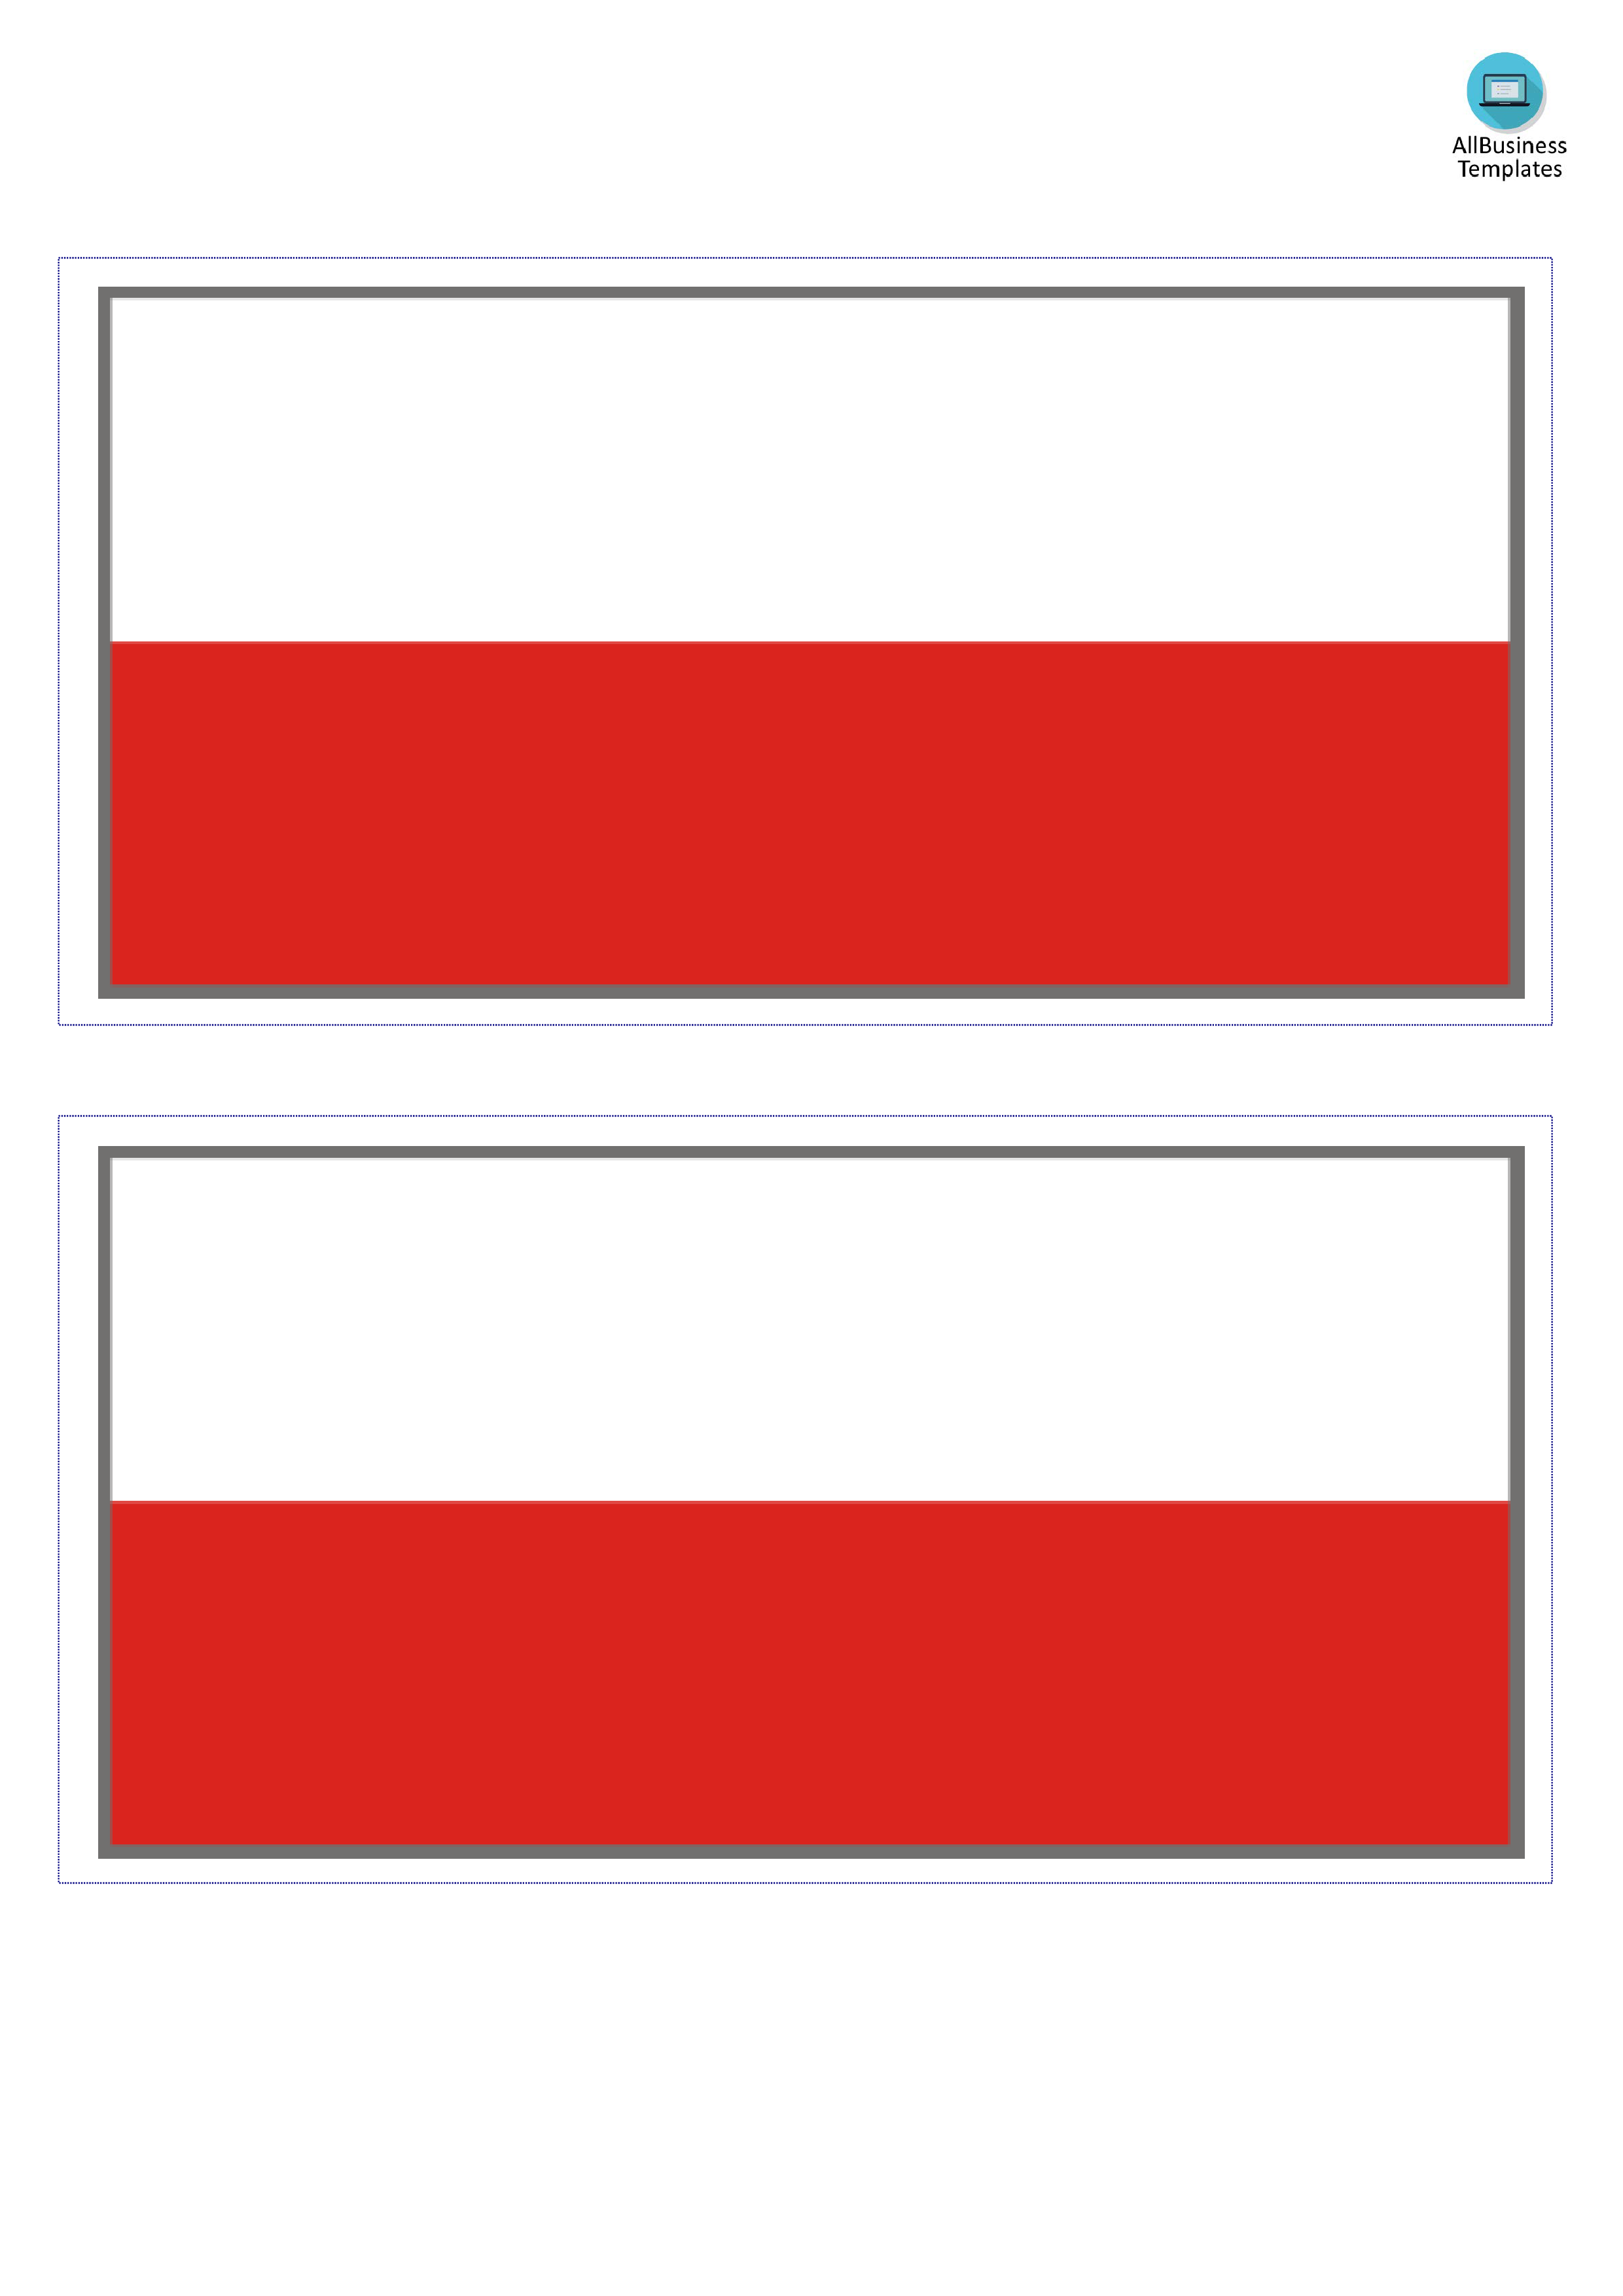 Poland Flag Templates at allbusinesstemplates com